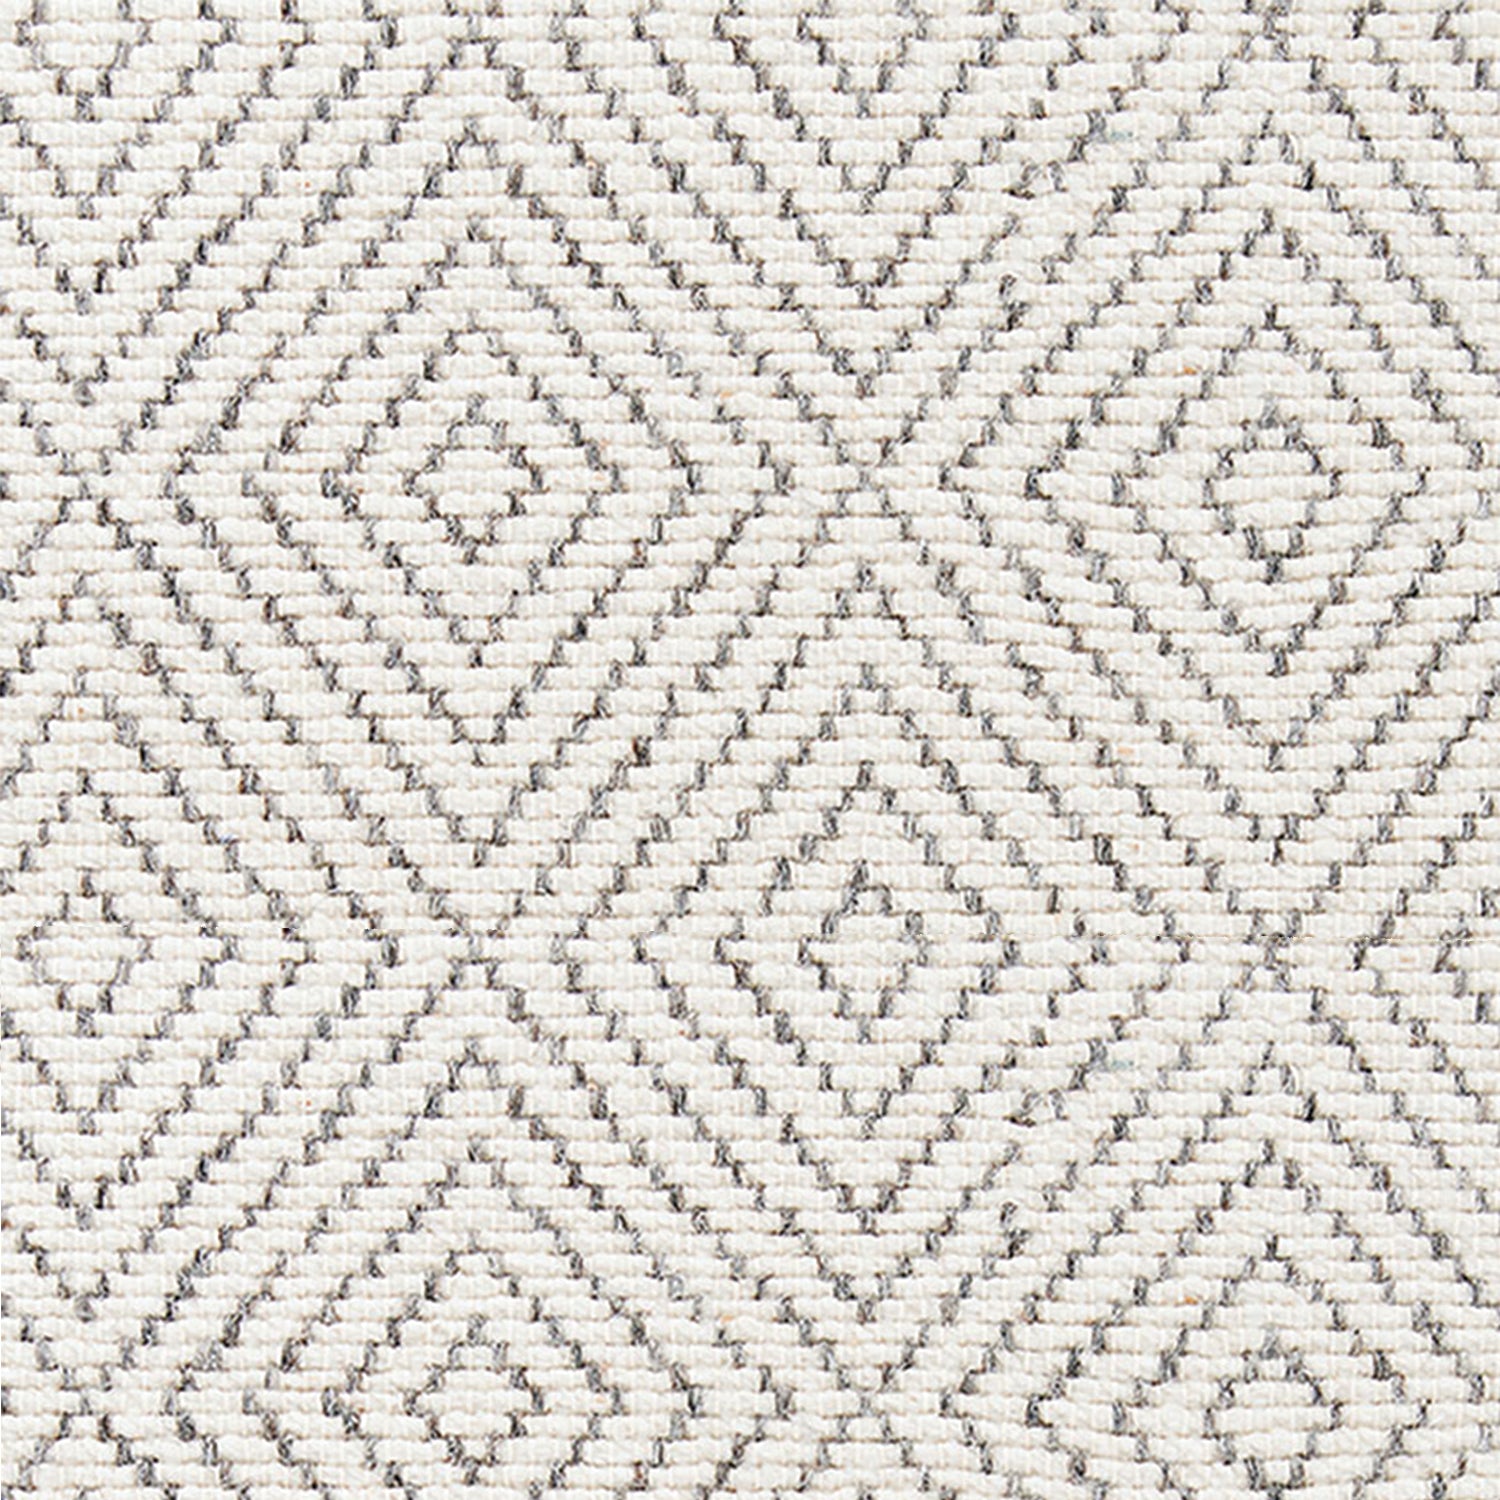 Wool broadloom carpet swatch in a graduated diamond print in dark gray on a cream field.